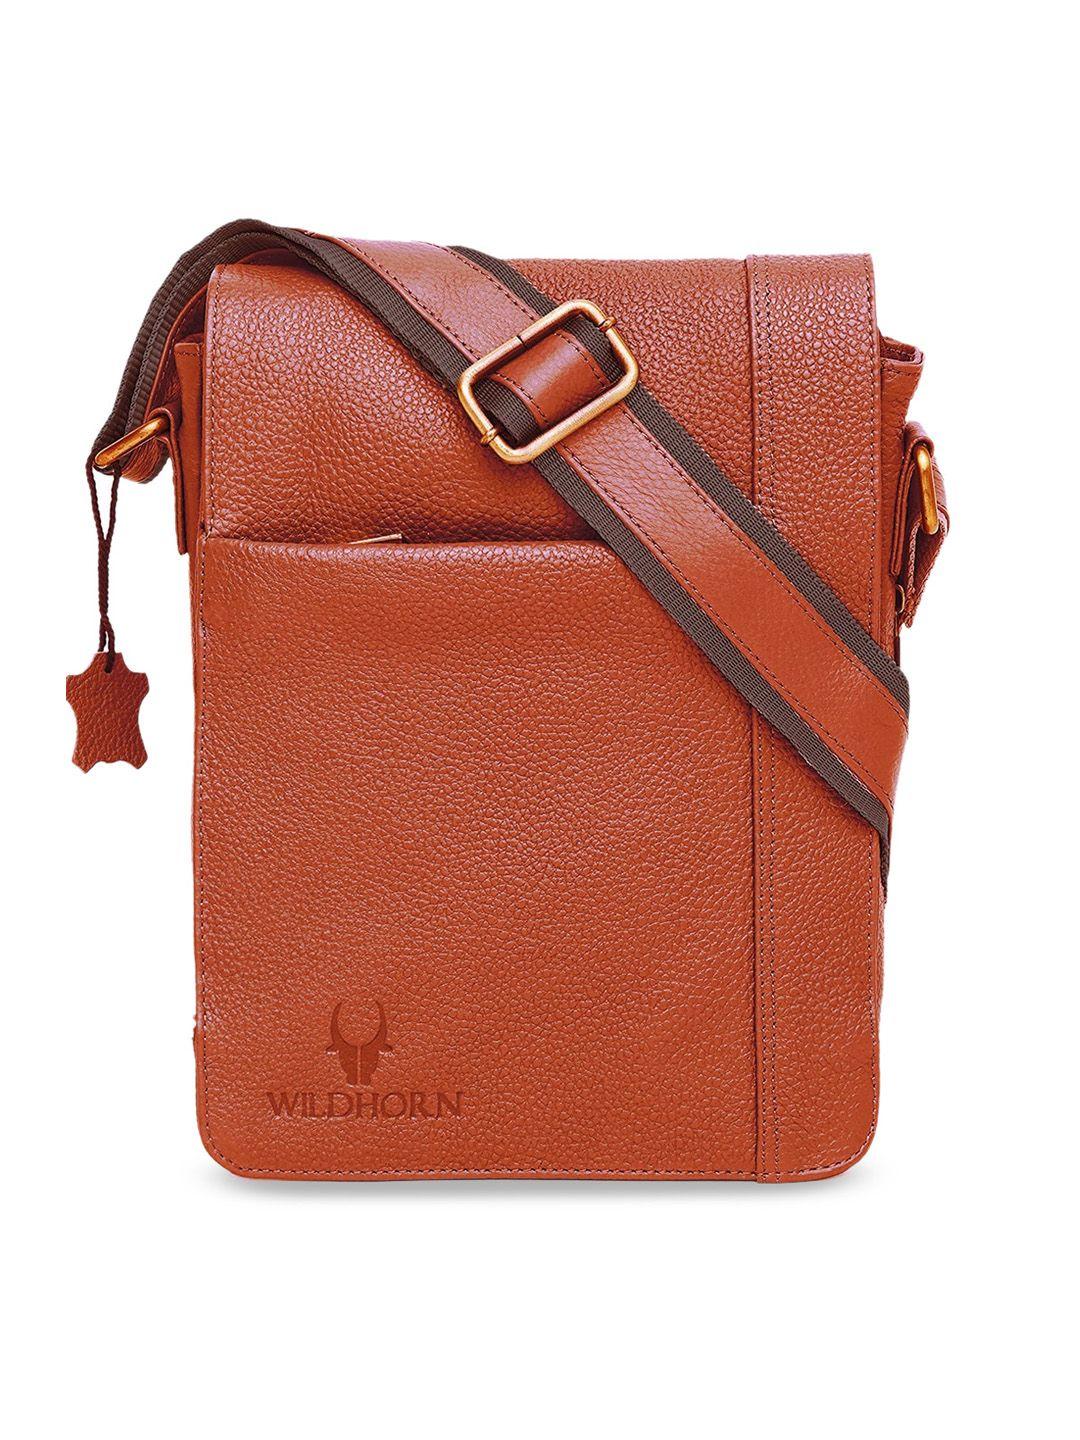 wildhorn tan leather structured sling bag